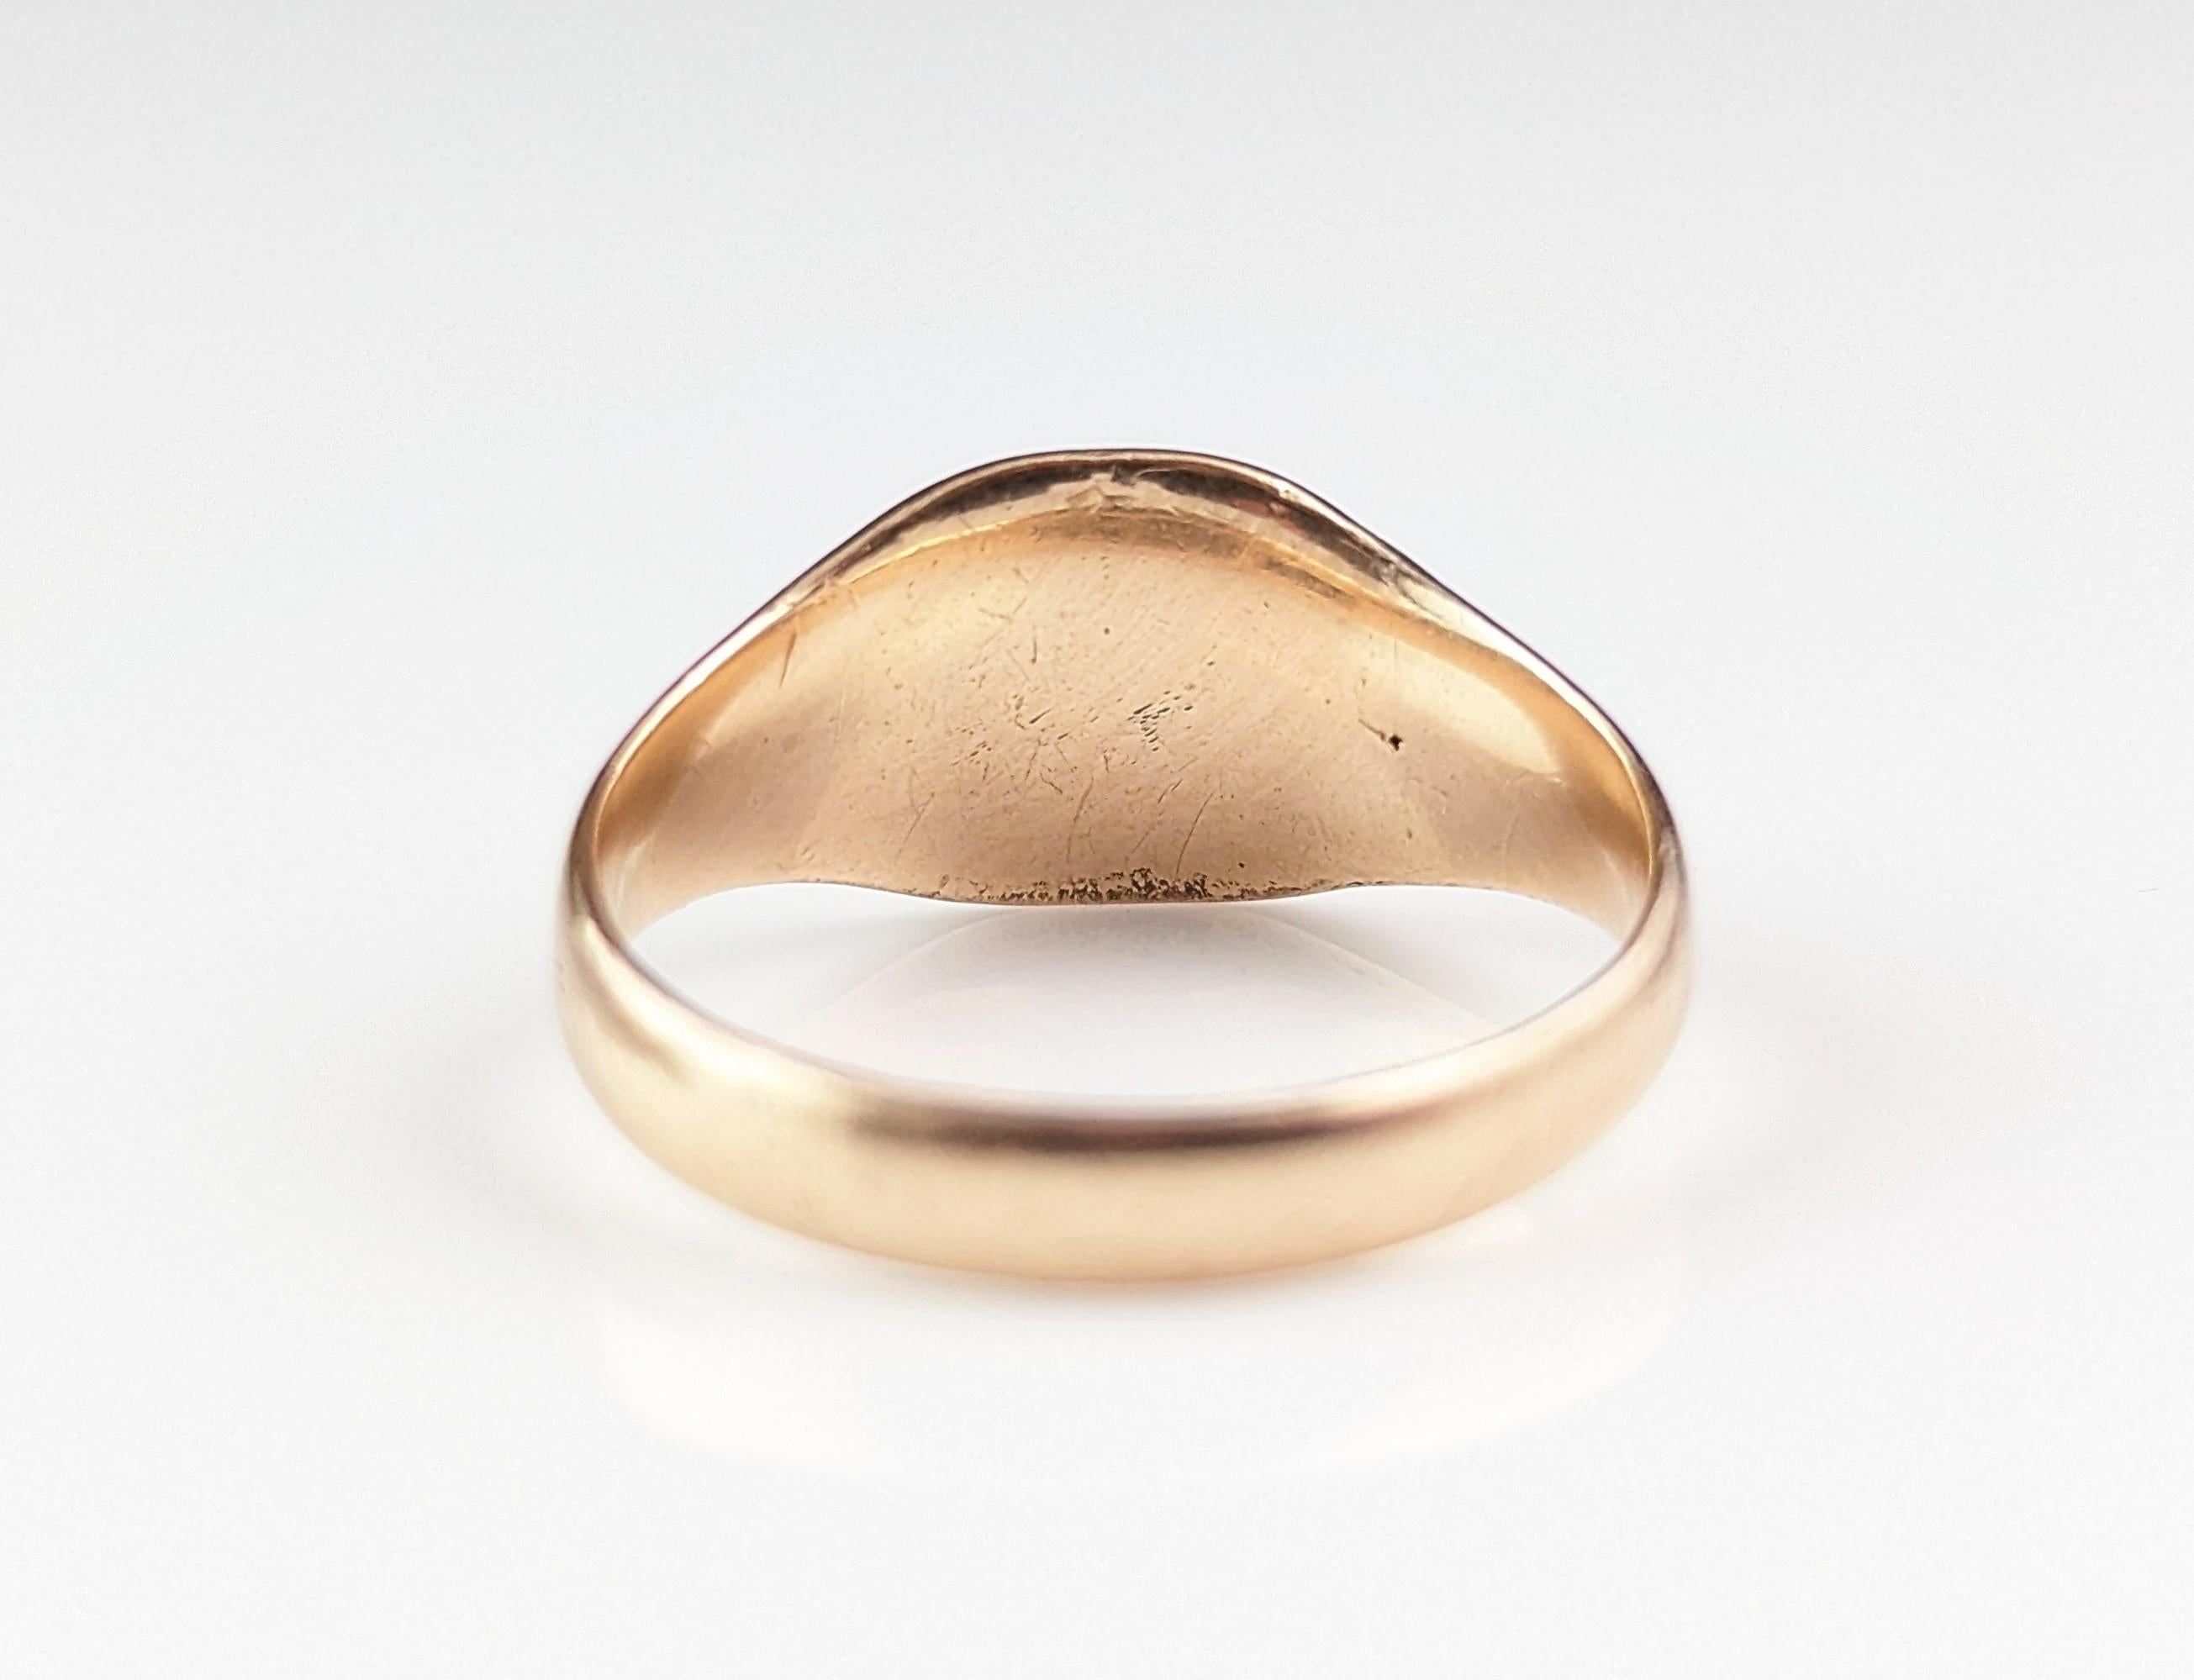 Antique 9k rose gold signet ring, Pinky ring, engraved  8